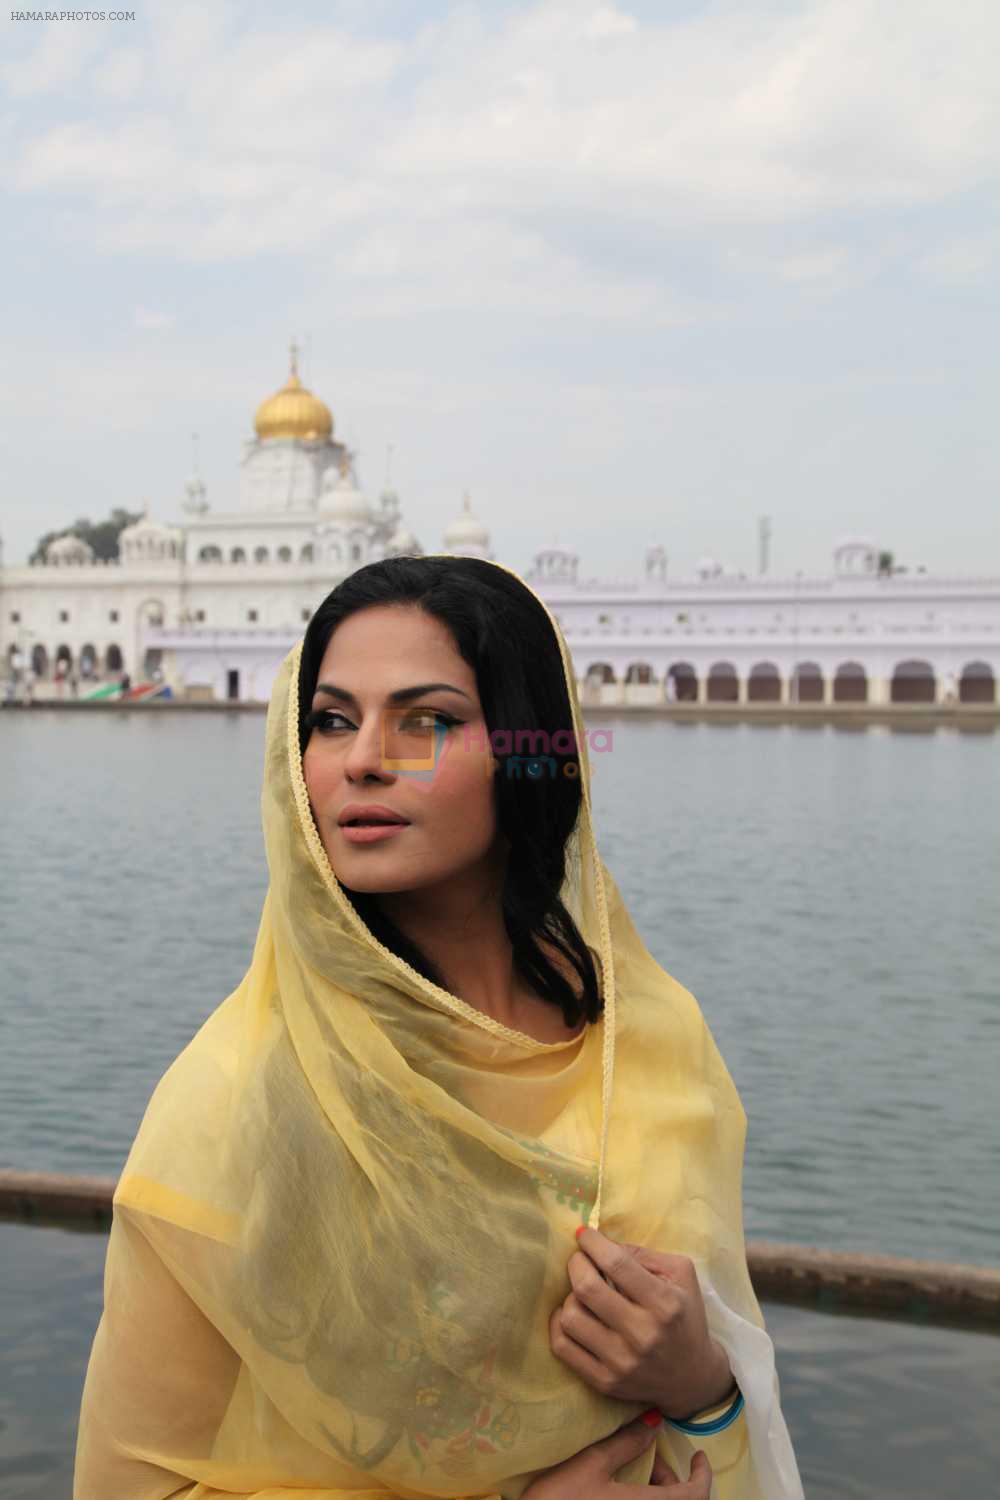 Veena Mali at Gurudwara47